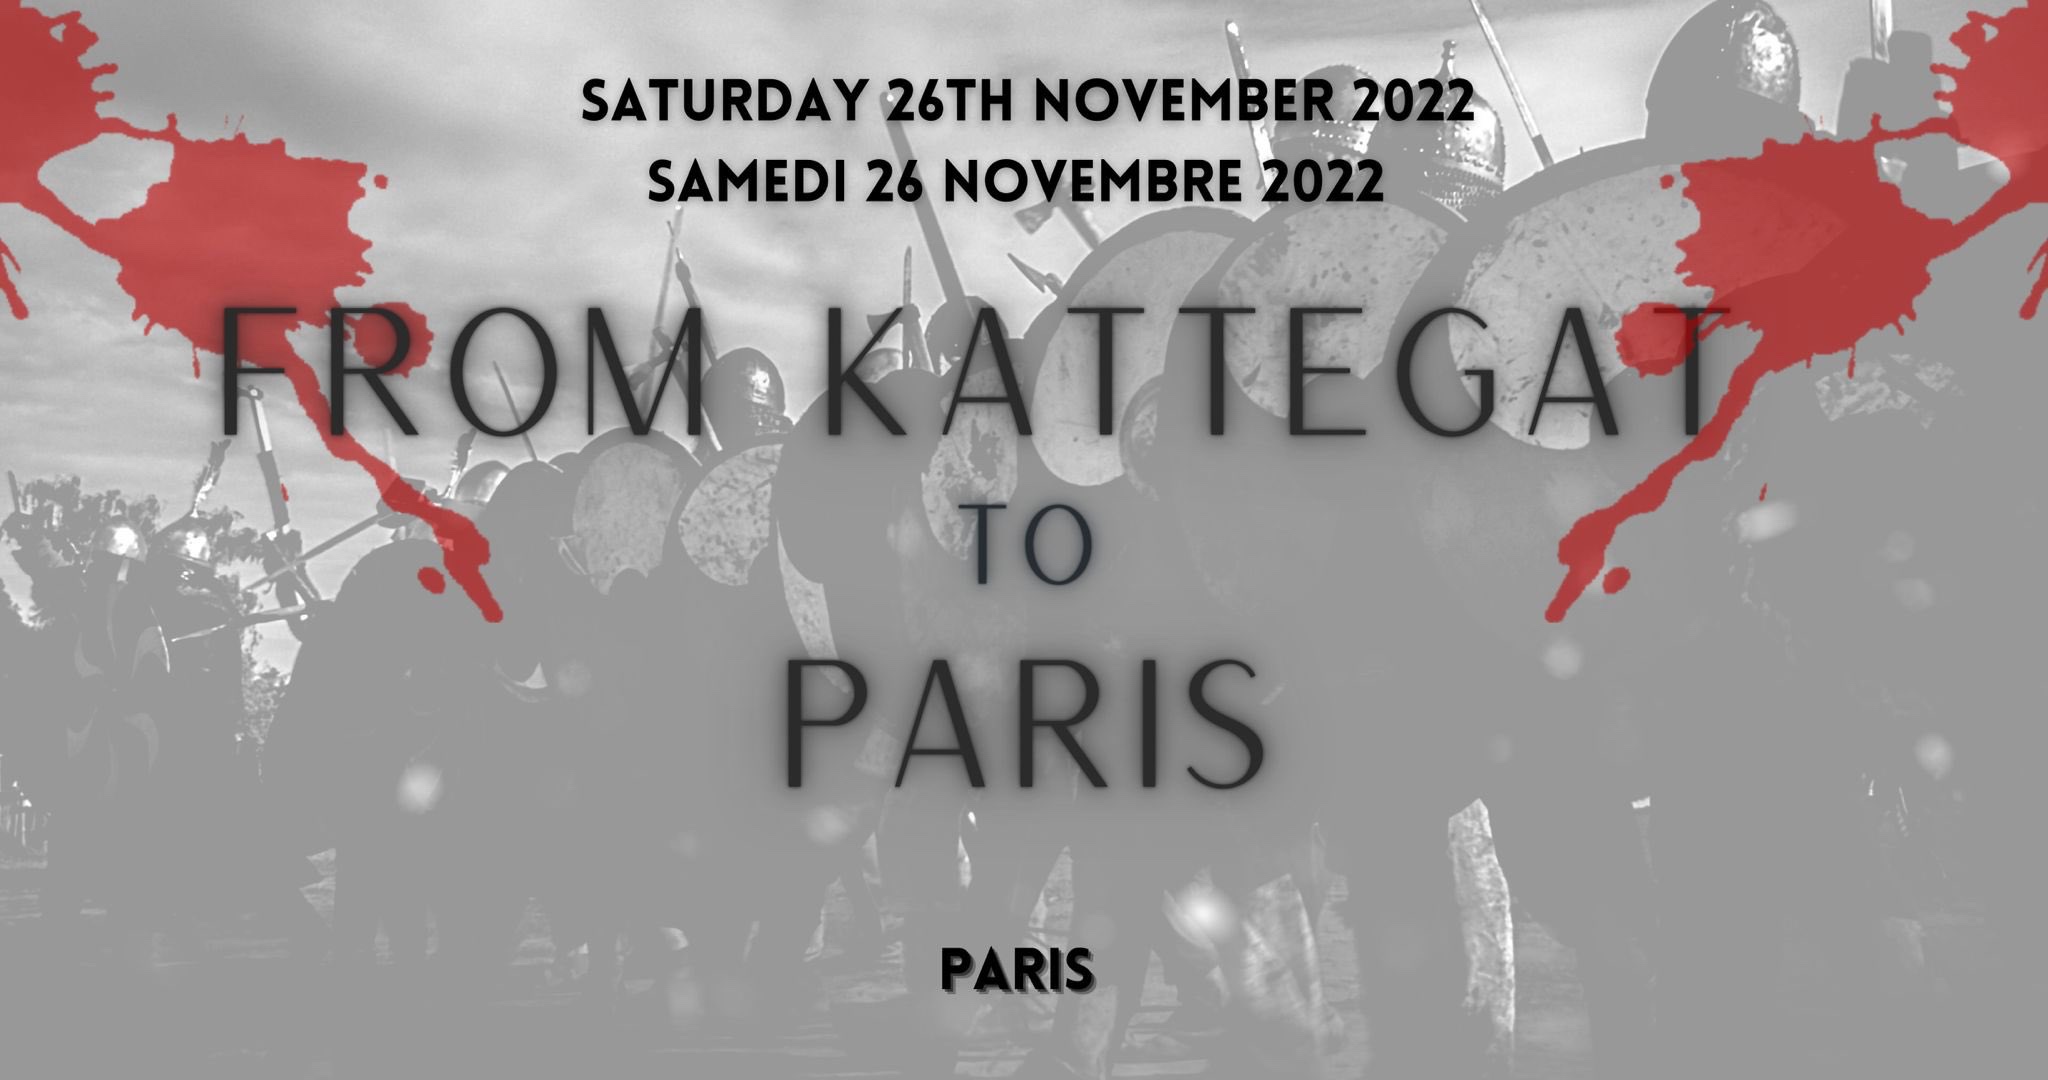 From Kattegat to Paris